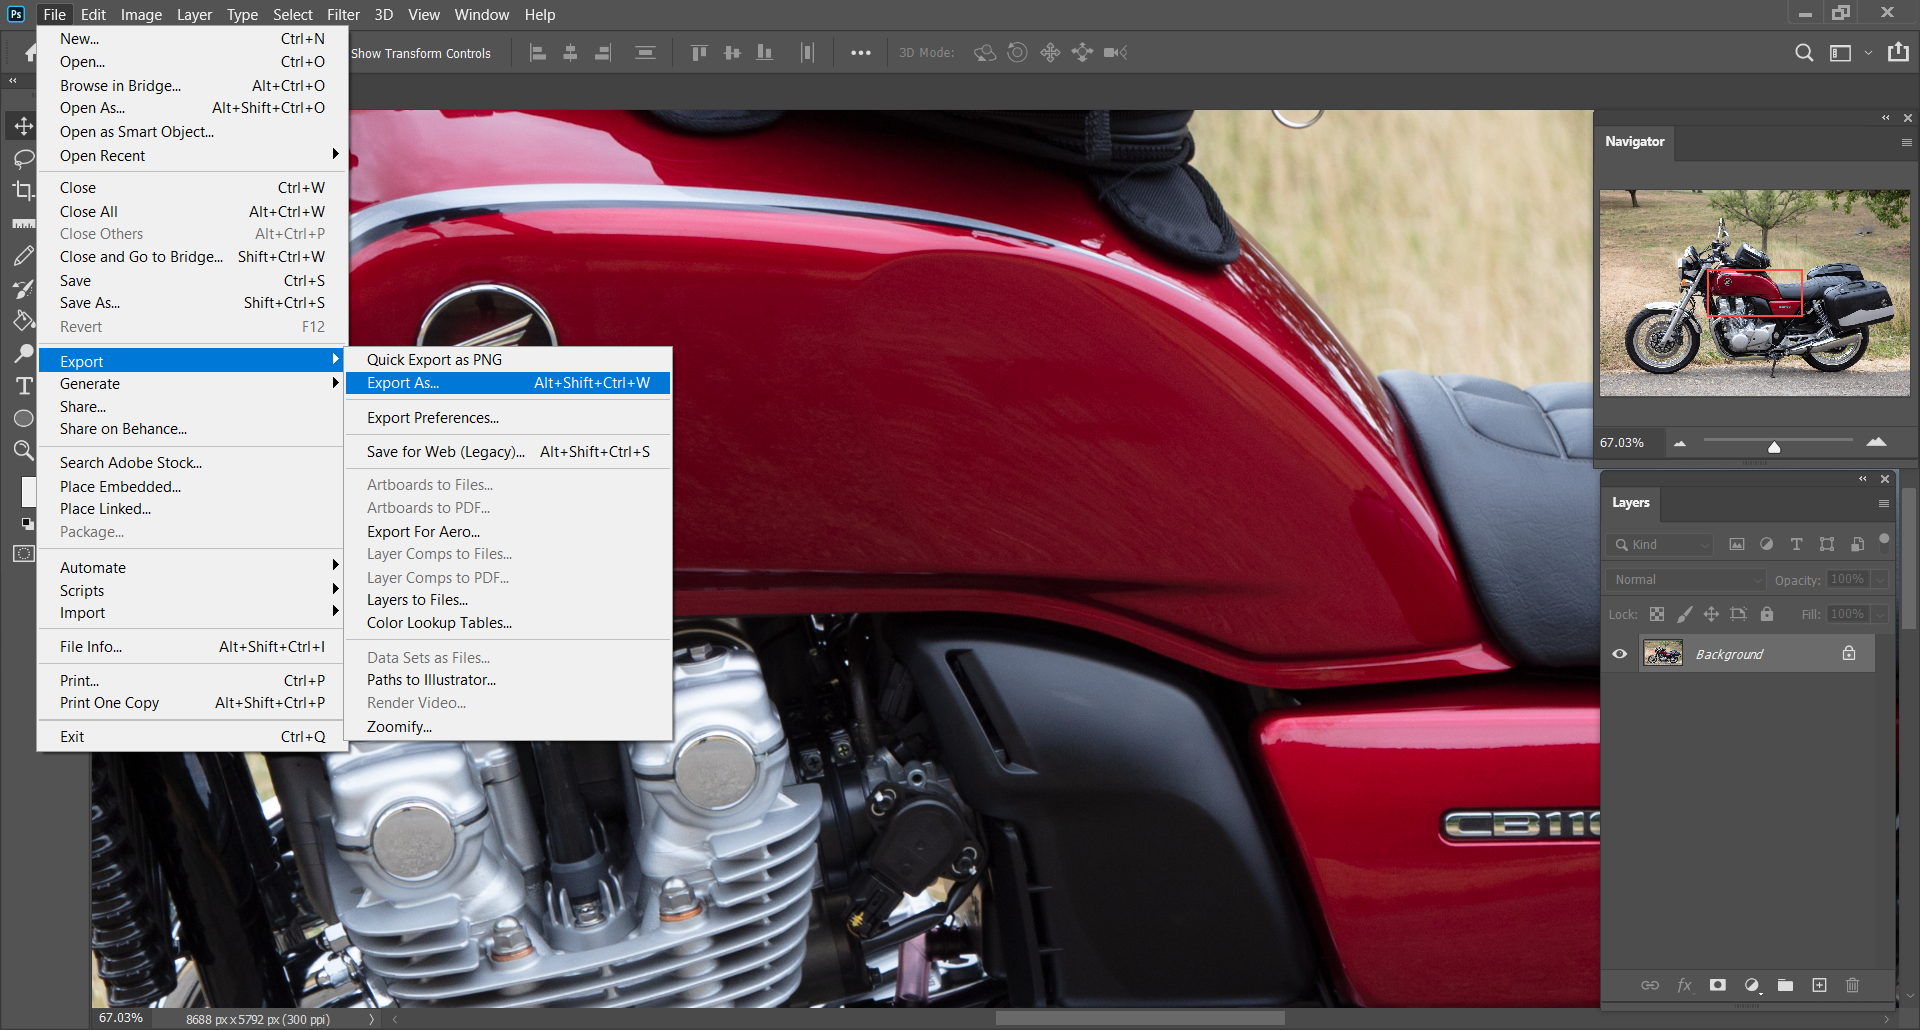 Is the best RAW converter Adobe Photoshop?